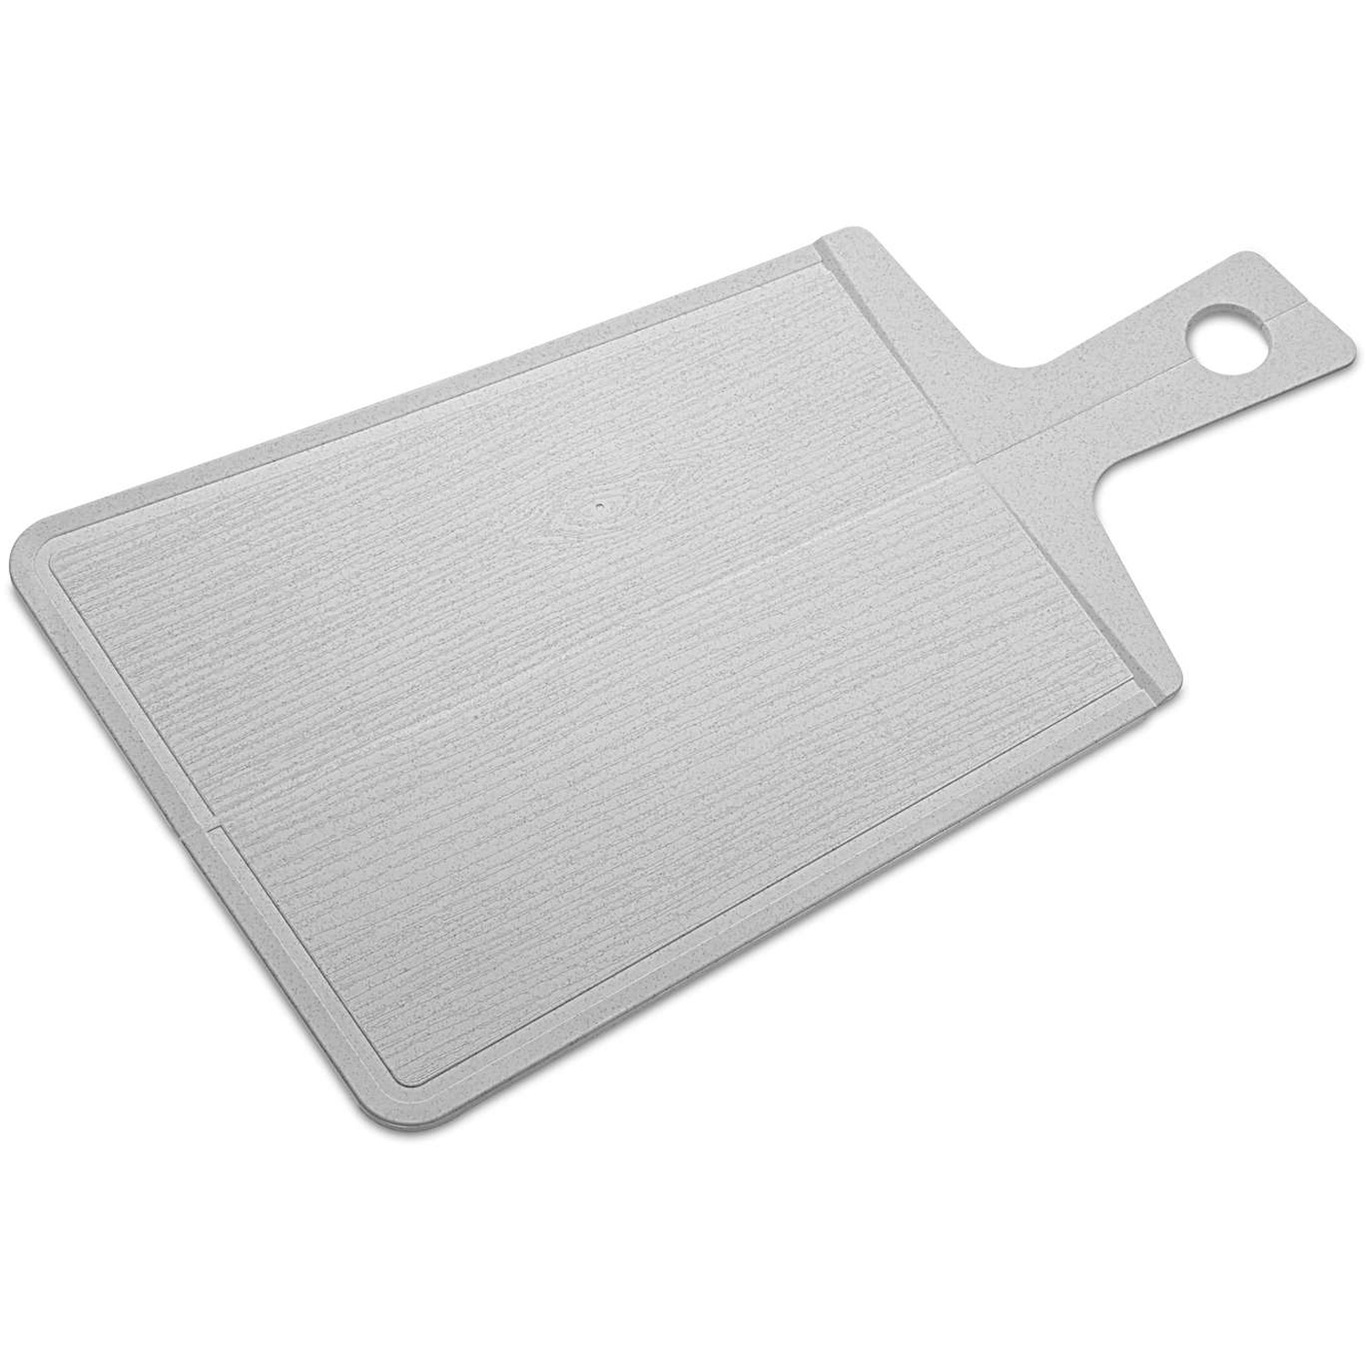 Snap 2.0 Cutting Board, Organic grey